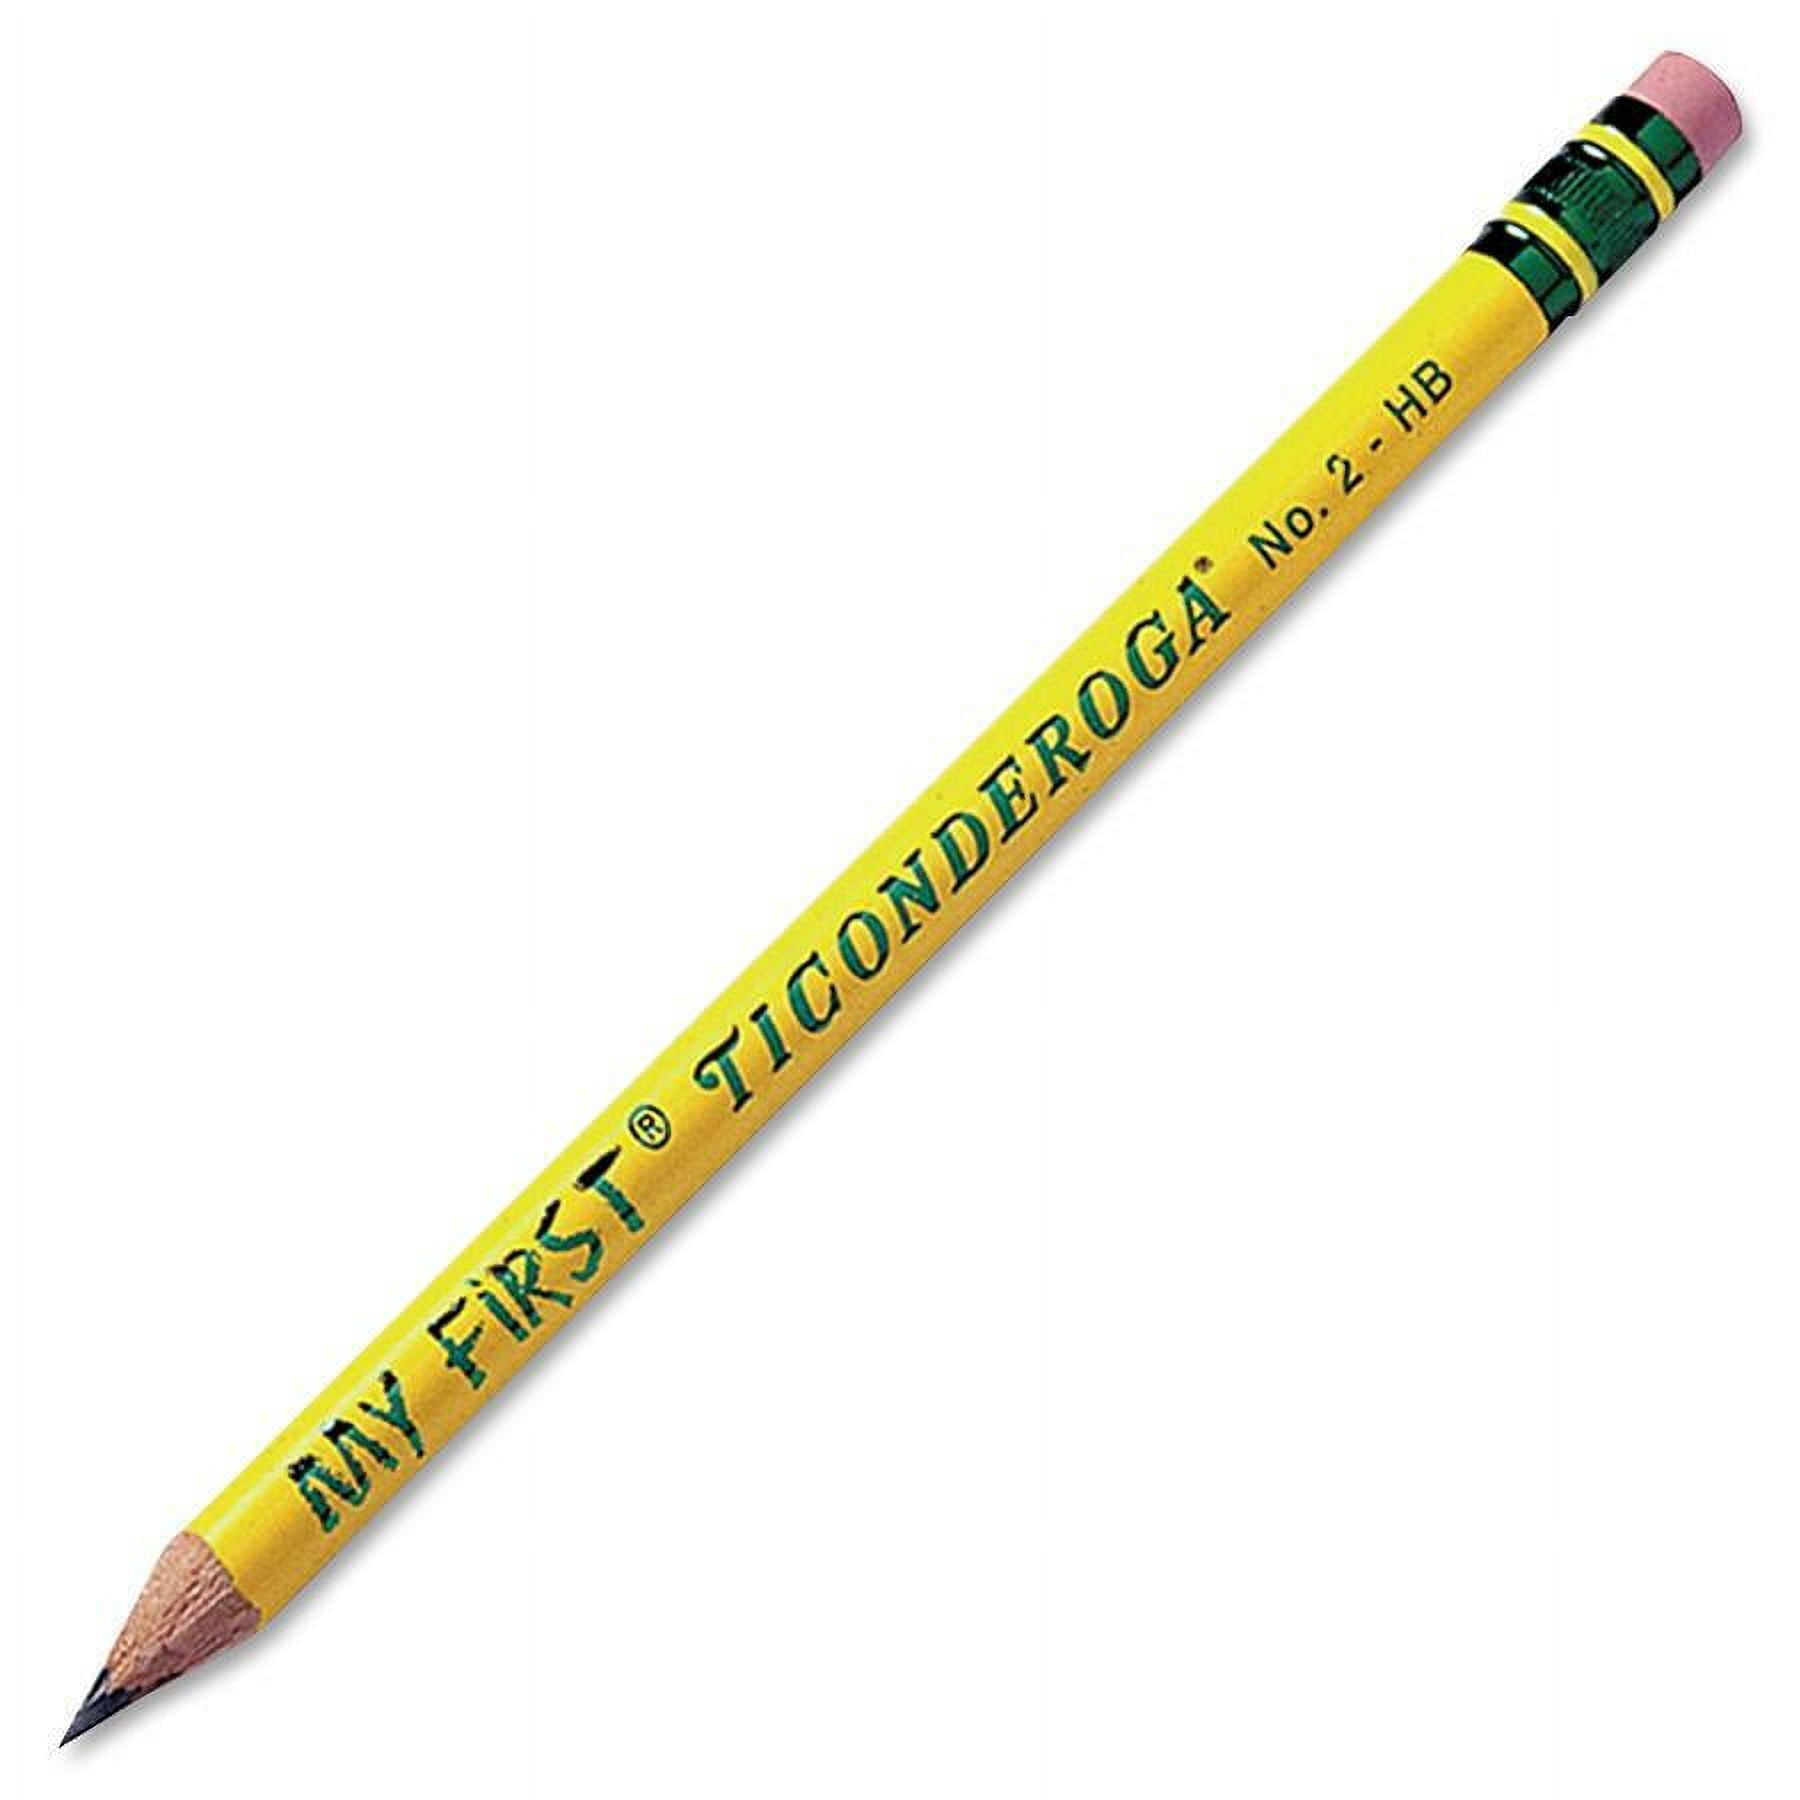 Mammoth Jumbo Pencils – America Standards NEW